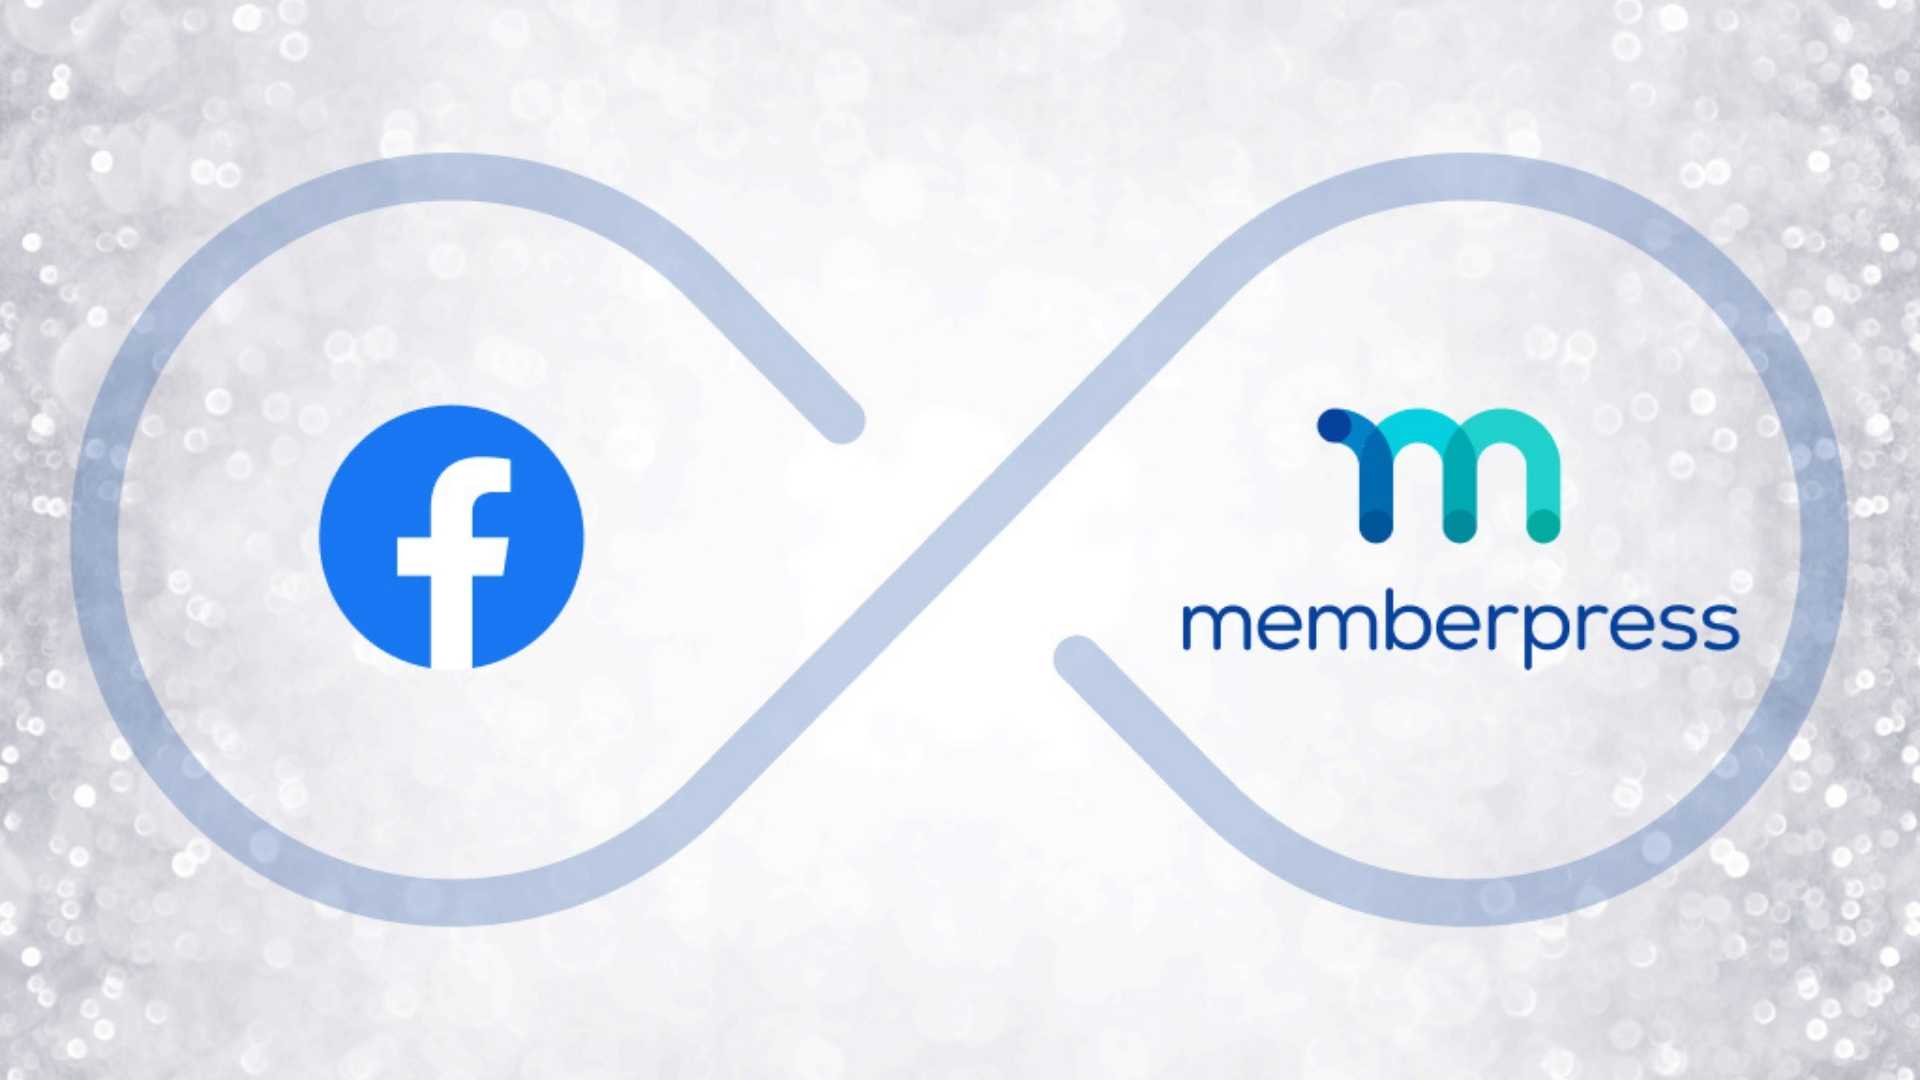 Facebook Meta MemberPress partnership graphic illustration